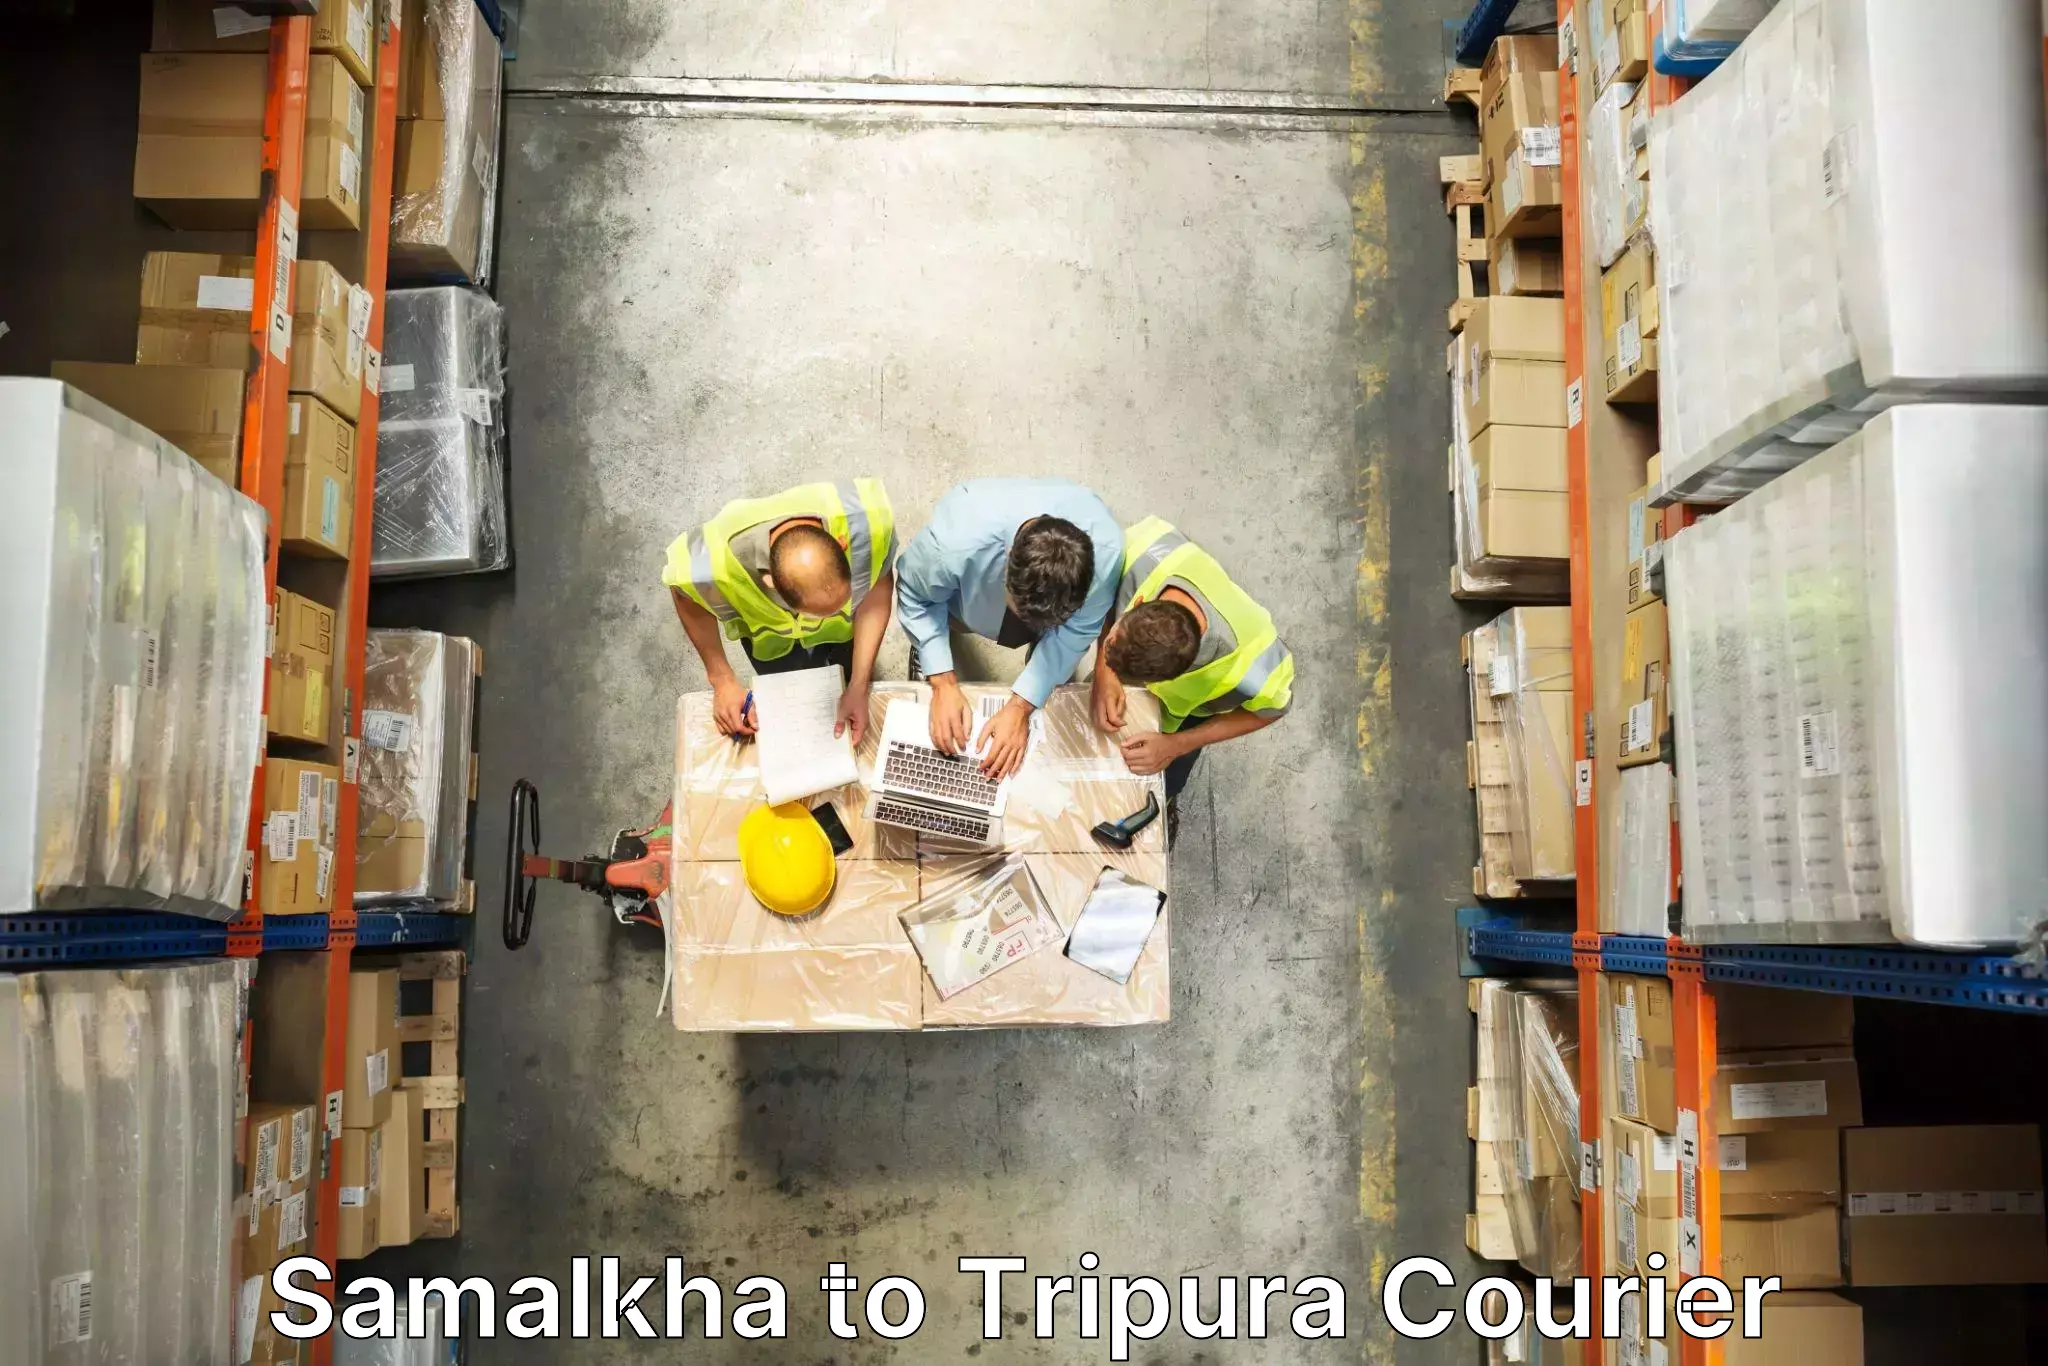 Quality moving company Samalkha to Udaipur Tripura